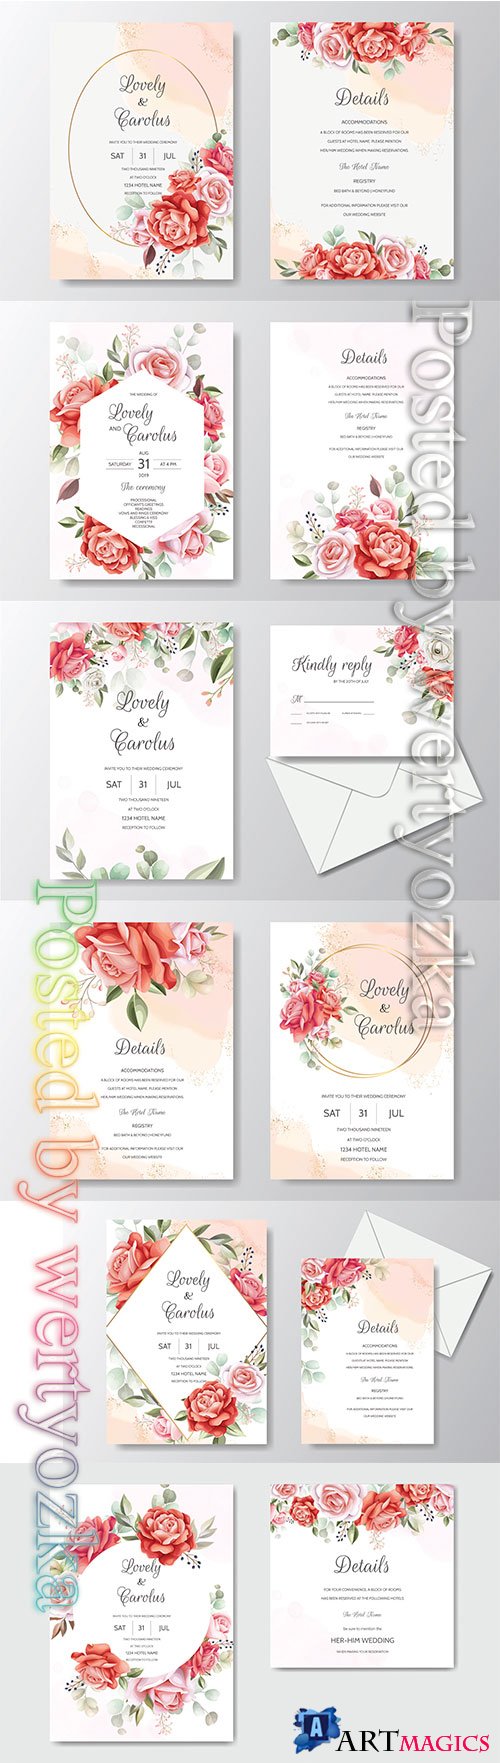 Beautiful floral wreath wedding invitation card template # 5